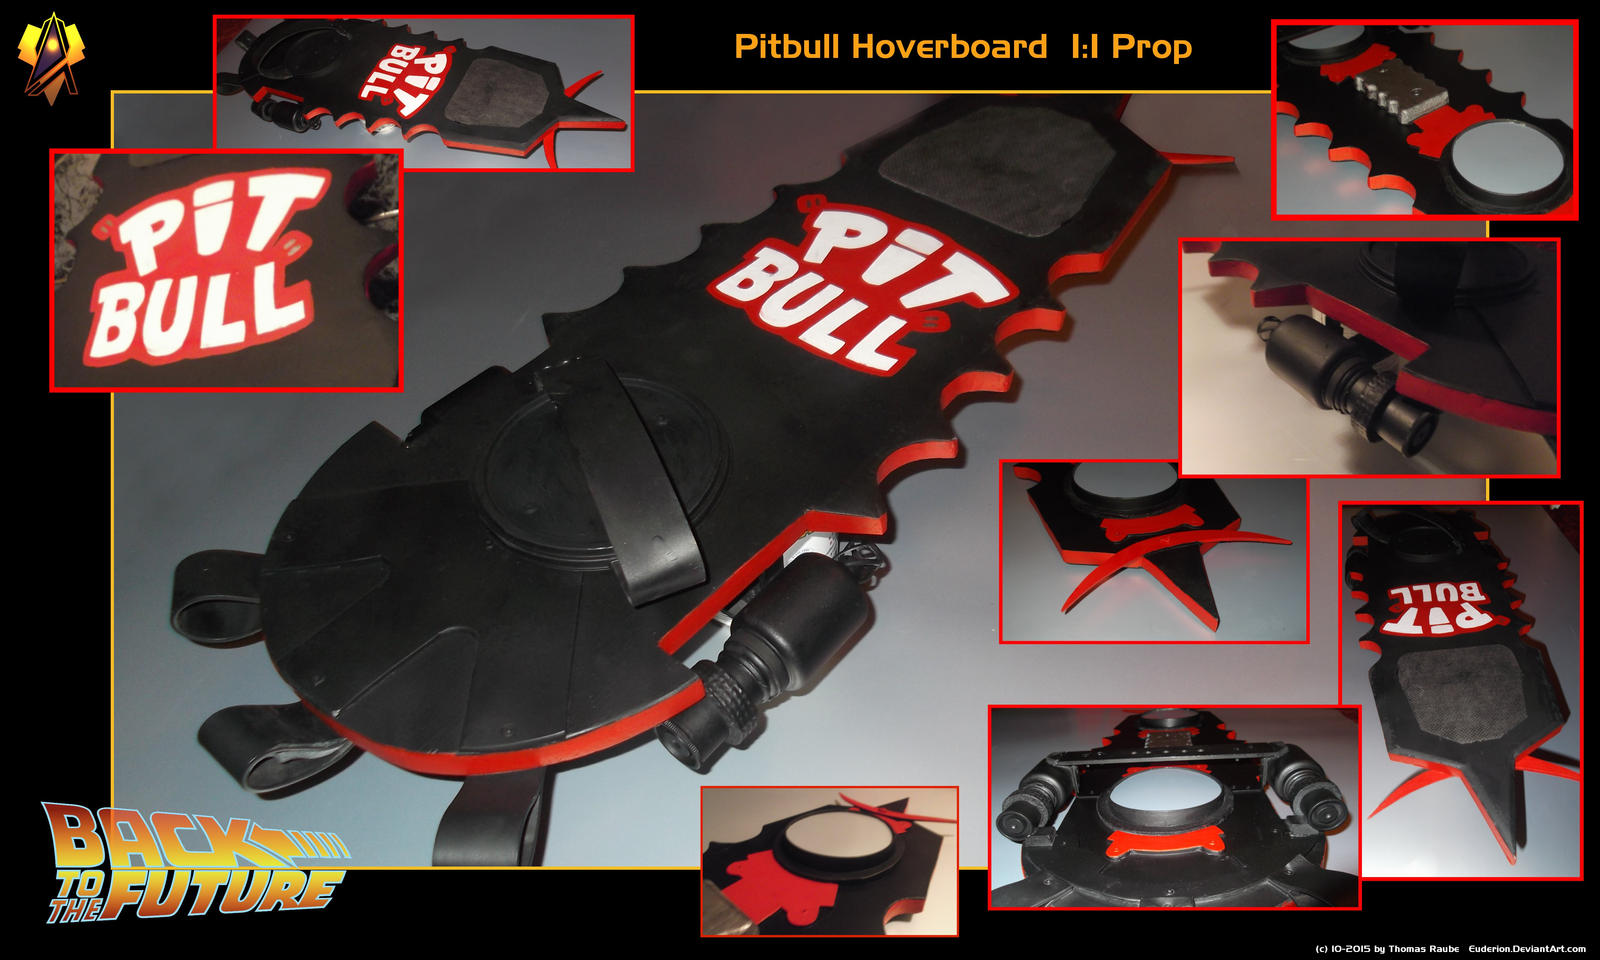 Pitbull Hoverboard Prop Details by Euderion on DeviantArt